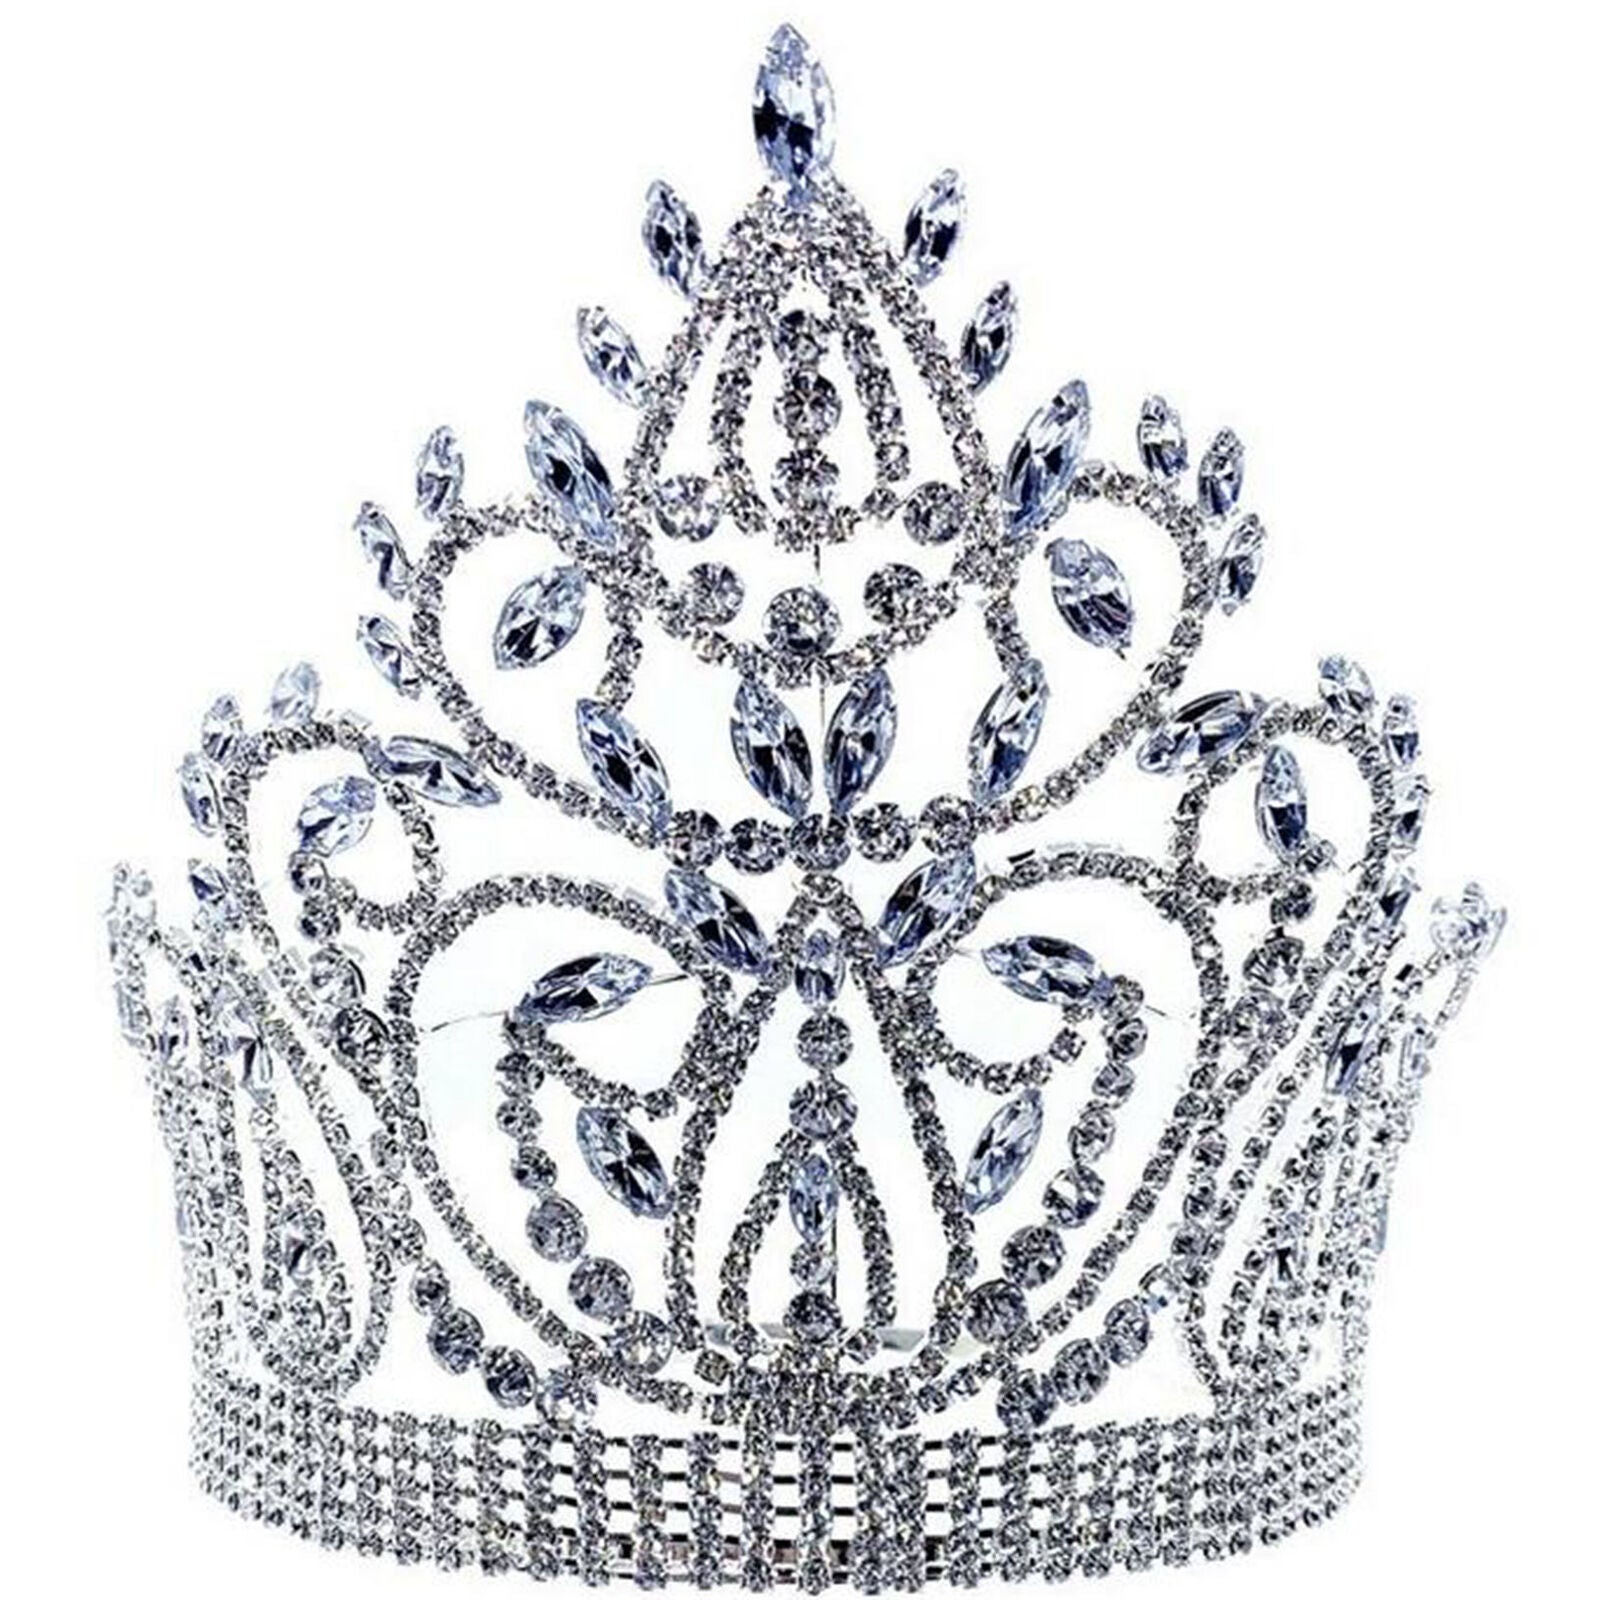 17cm High Crystal Huge Tiara Crown Wedding Bridal Party Pageant Prom Adjustable